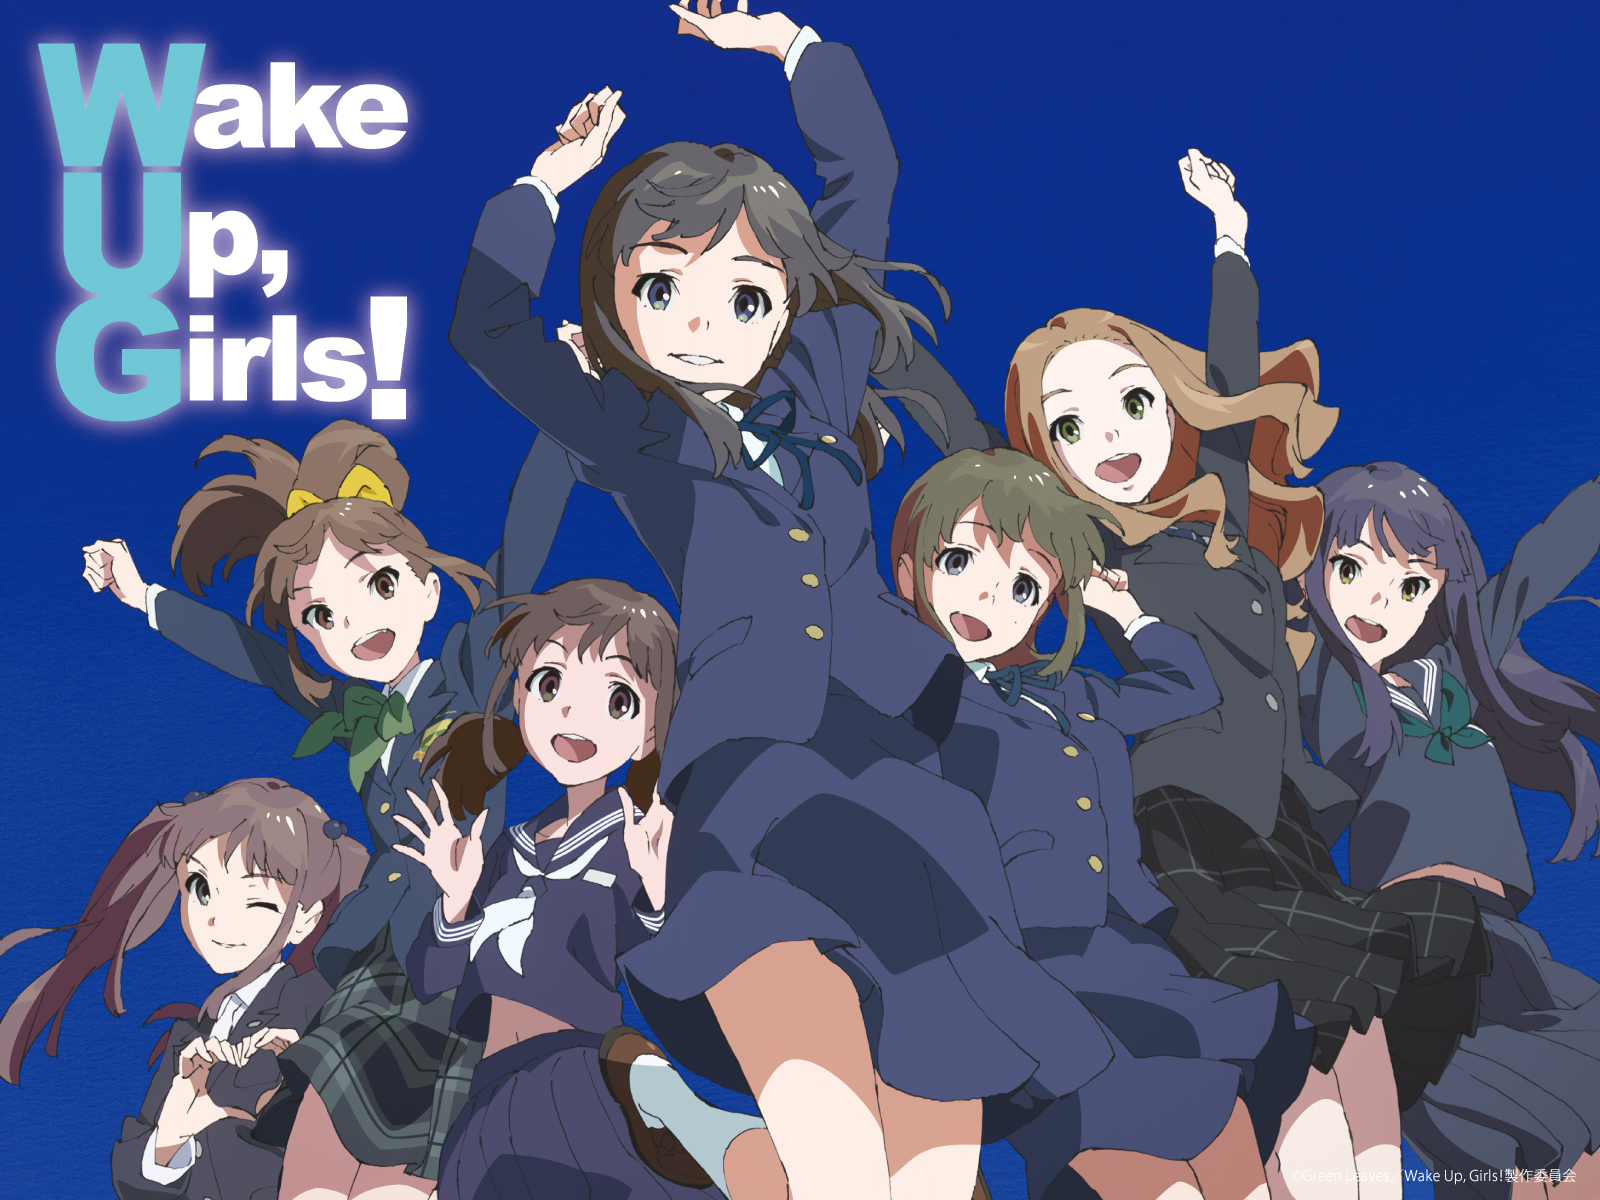 Wake Up Girls! (Group) Wallpaper Anime